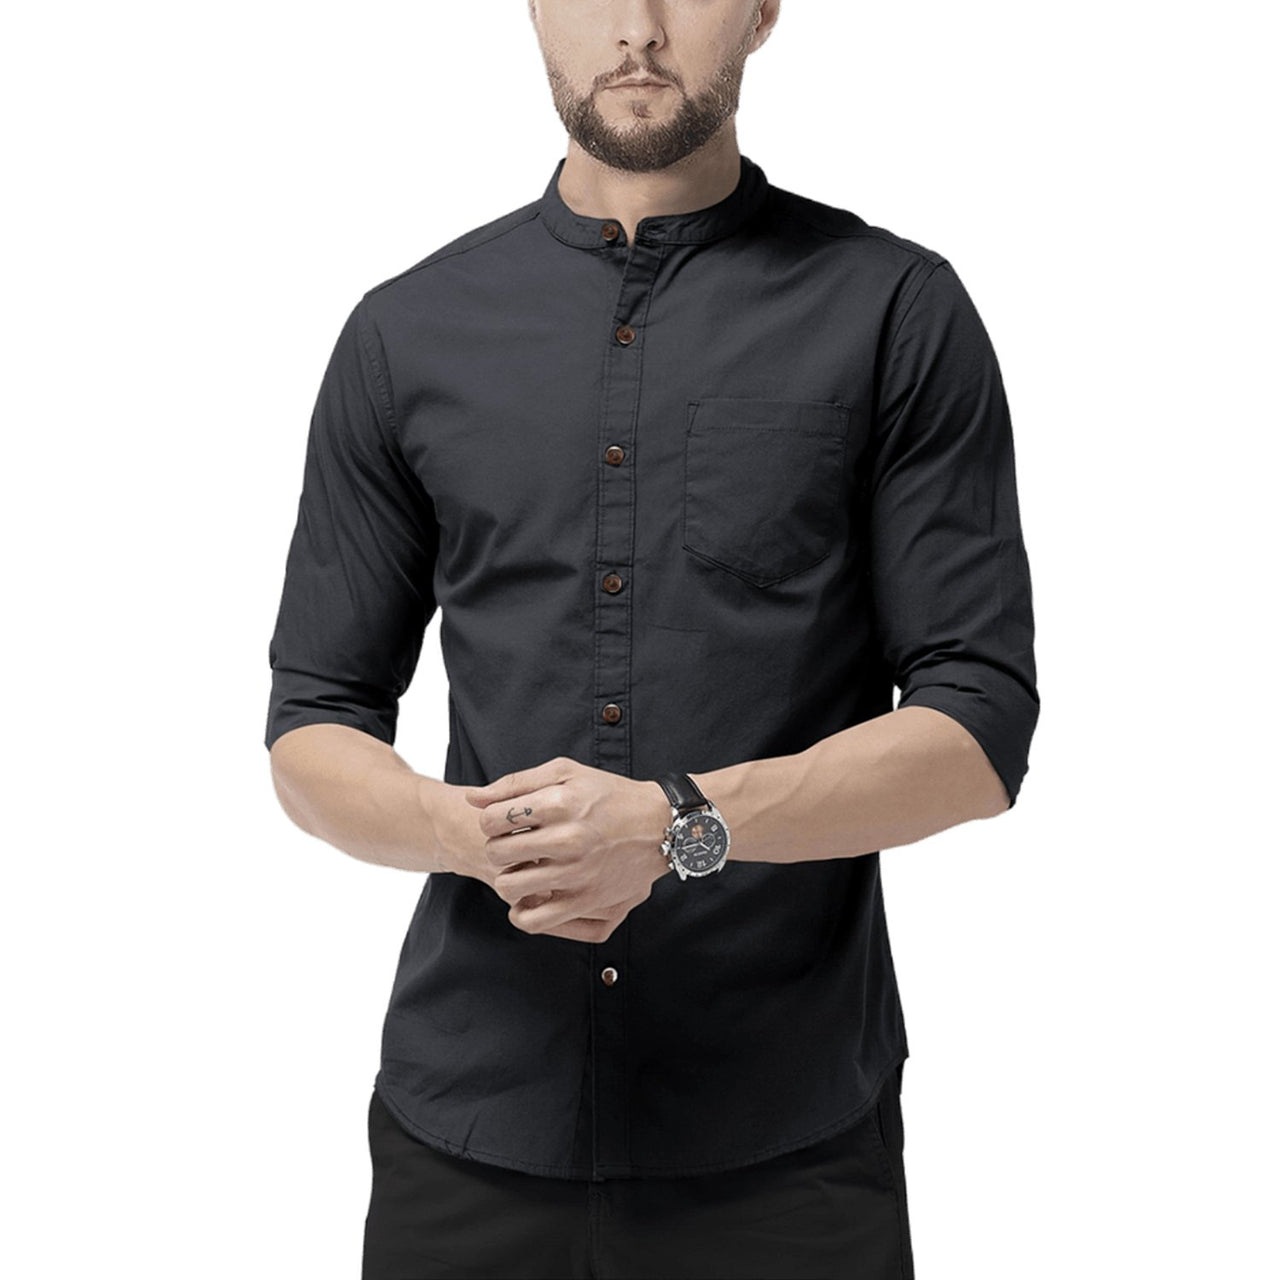 Hemploom - Elegant Hemp & Cotton Shirt in Black - CBD Store India